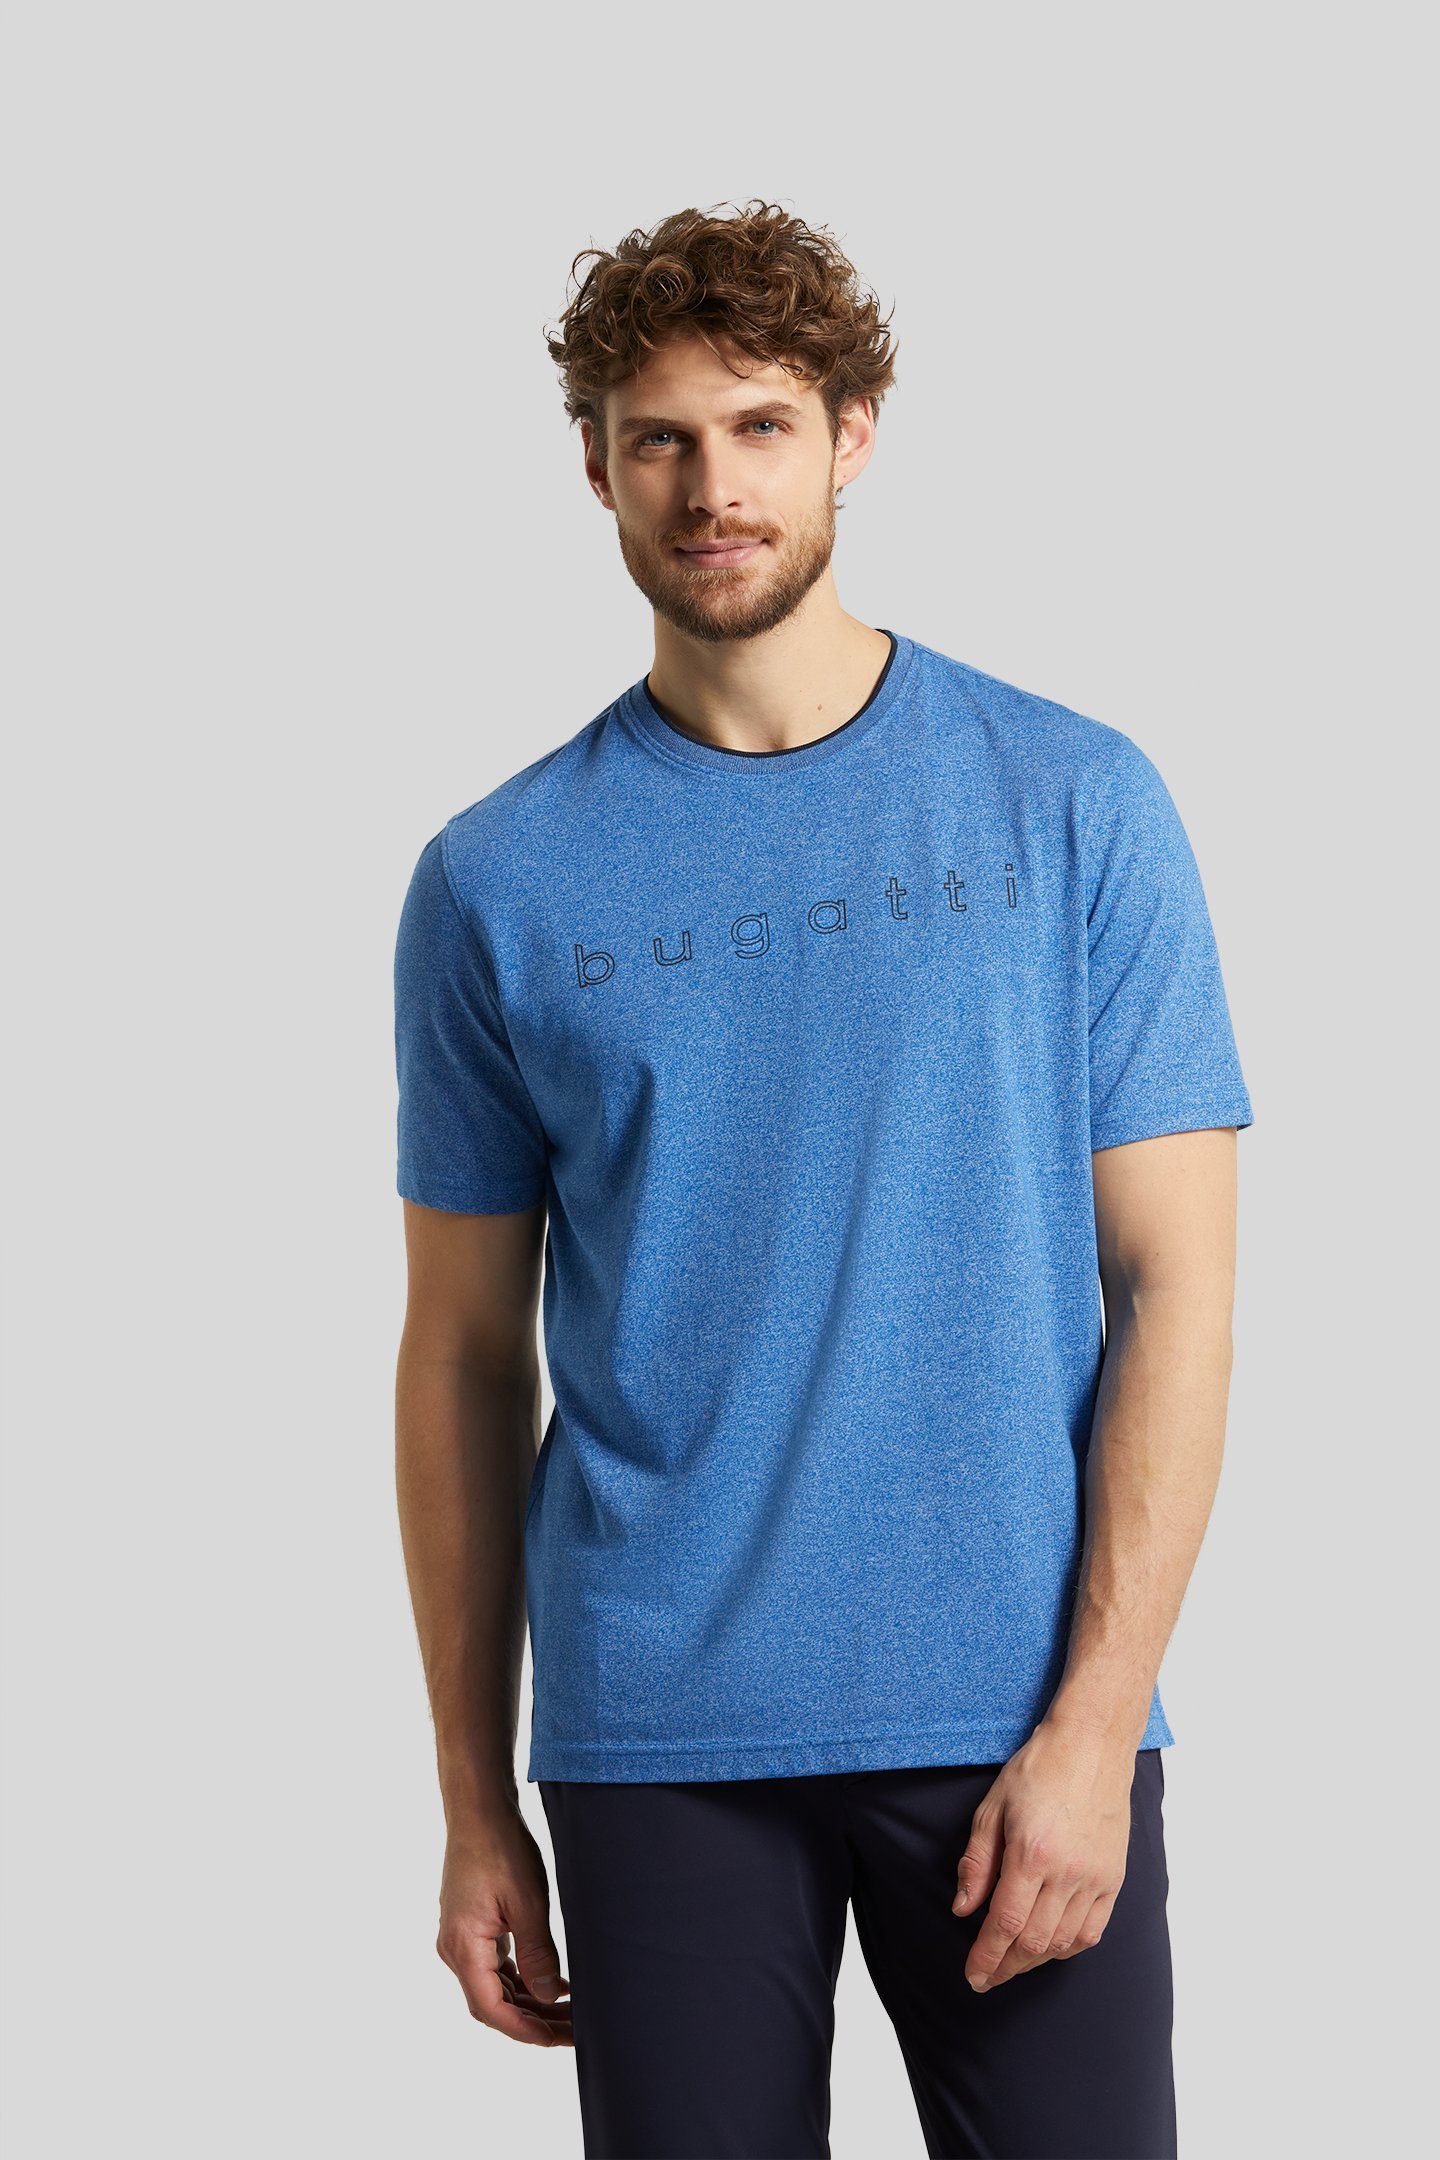 Logo-Print großem blau bugatti bugatti mit T-Shirt